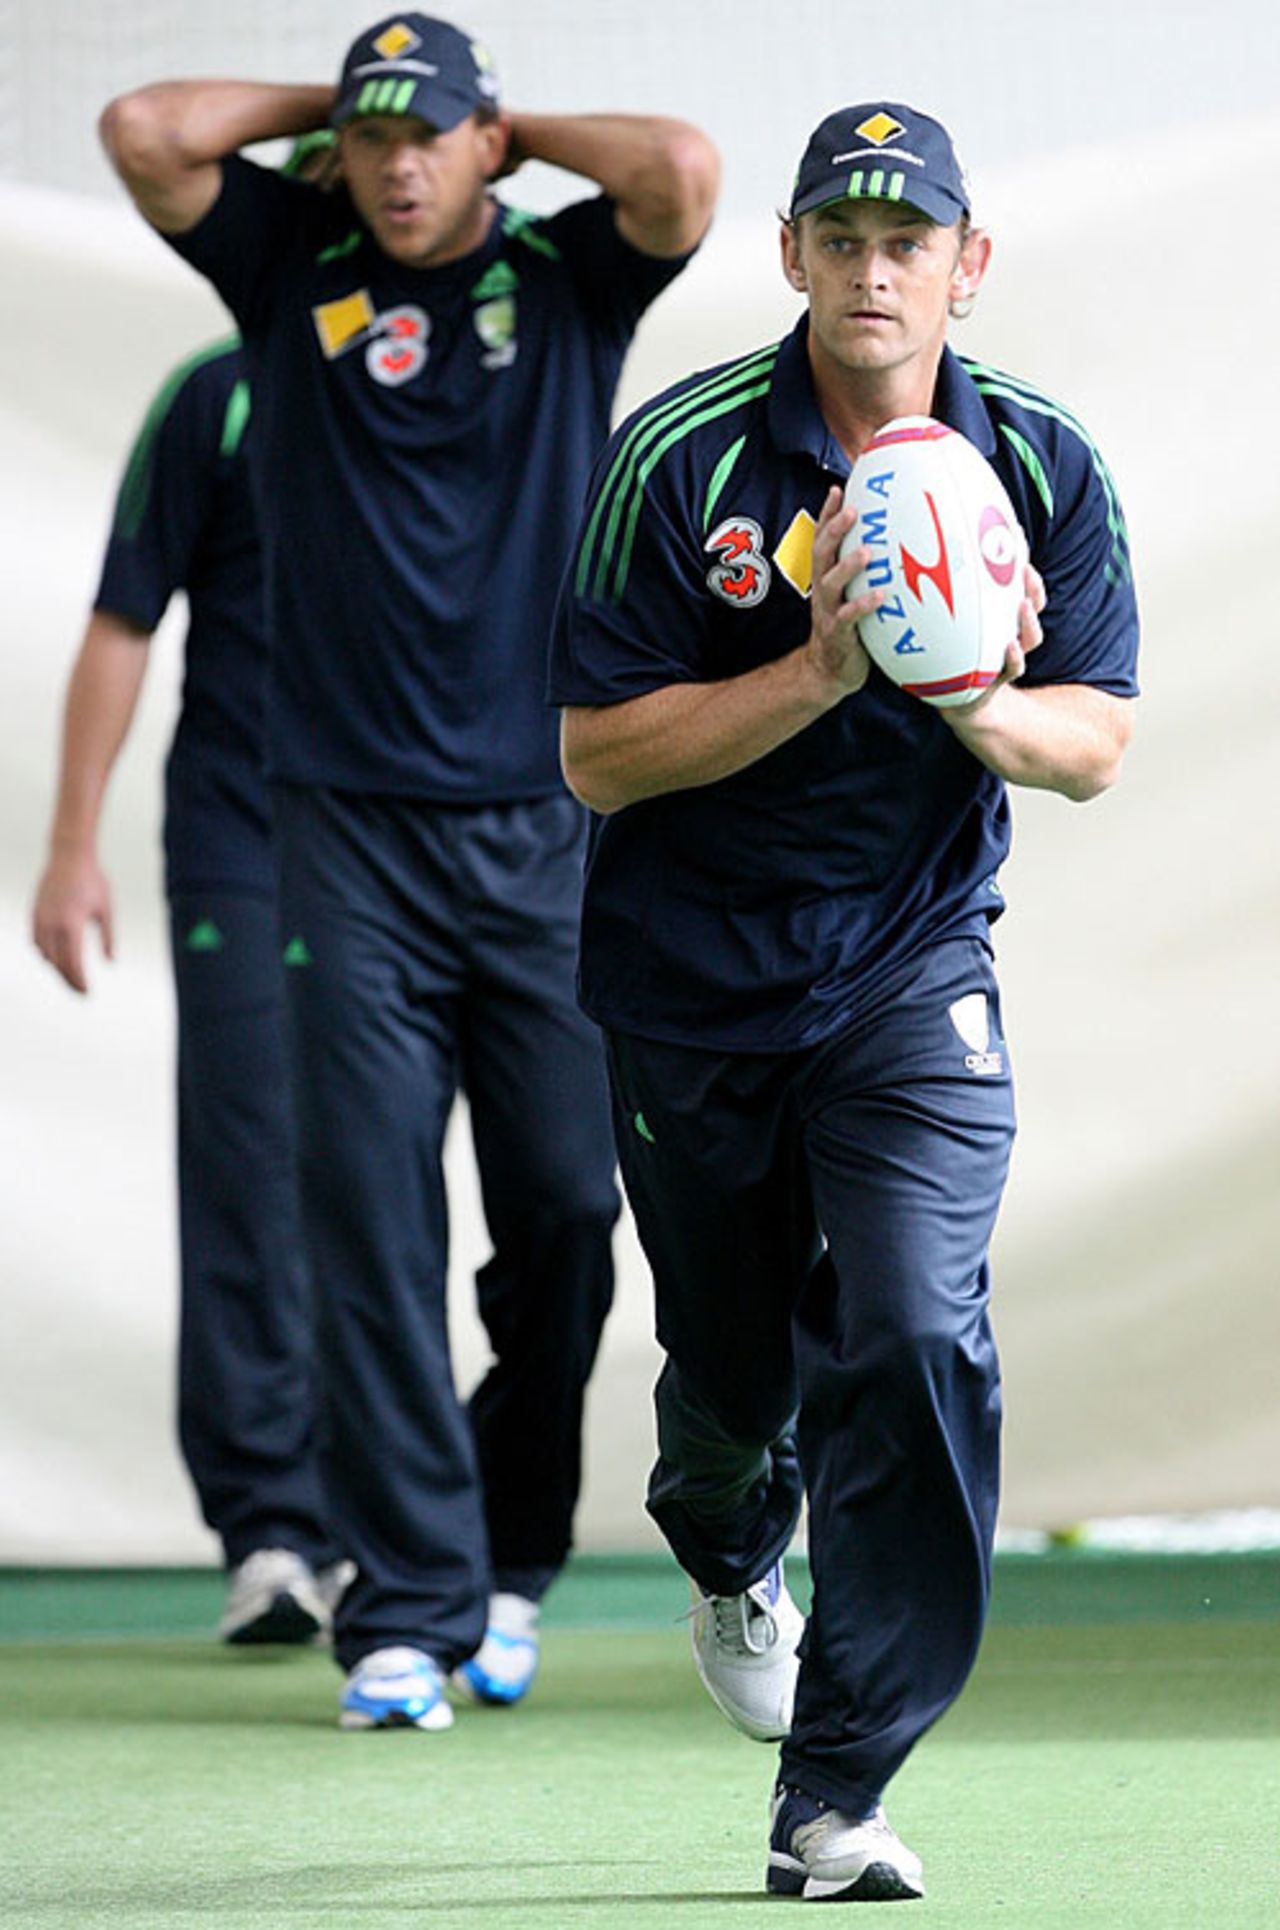 Adam Gilchrist trains ahead of his final Twenty20 international appearance, Melbourne, January 31, 2008